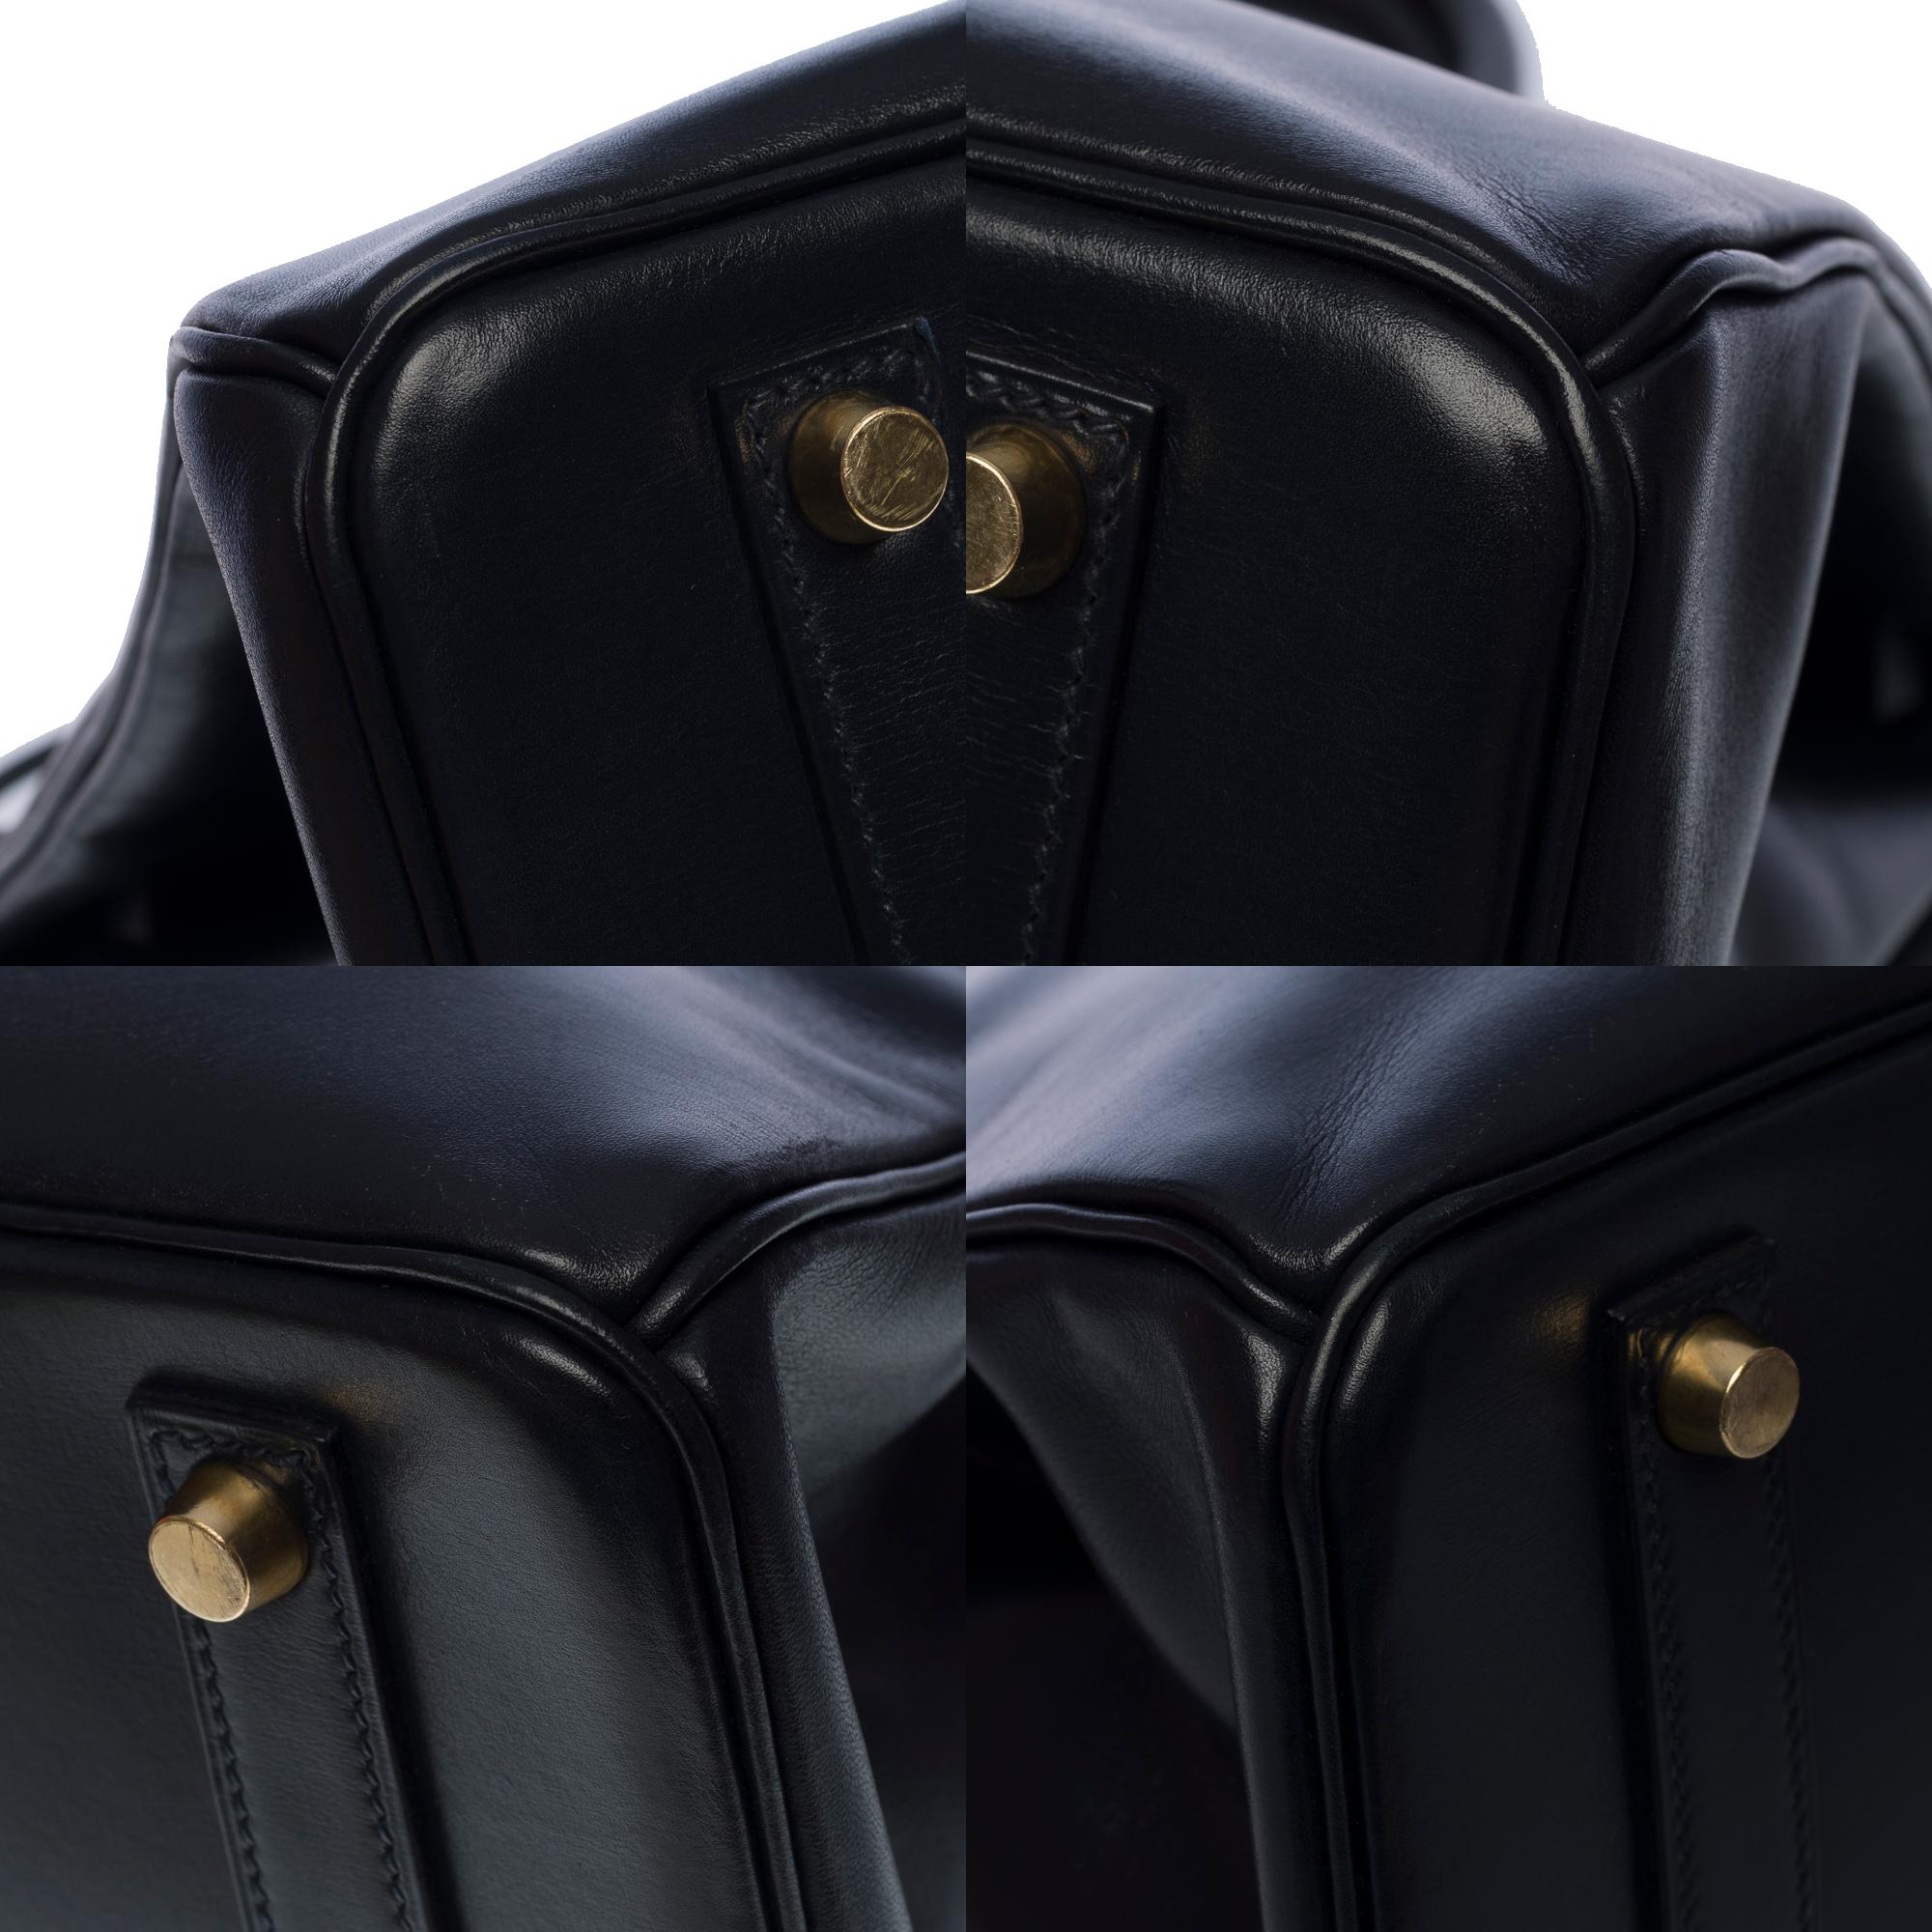 Amazing & Rare Hermès Birkin 35 handbag in Blue indigo box calfskin leather, GHW 6